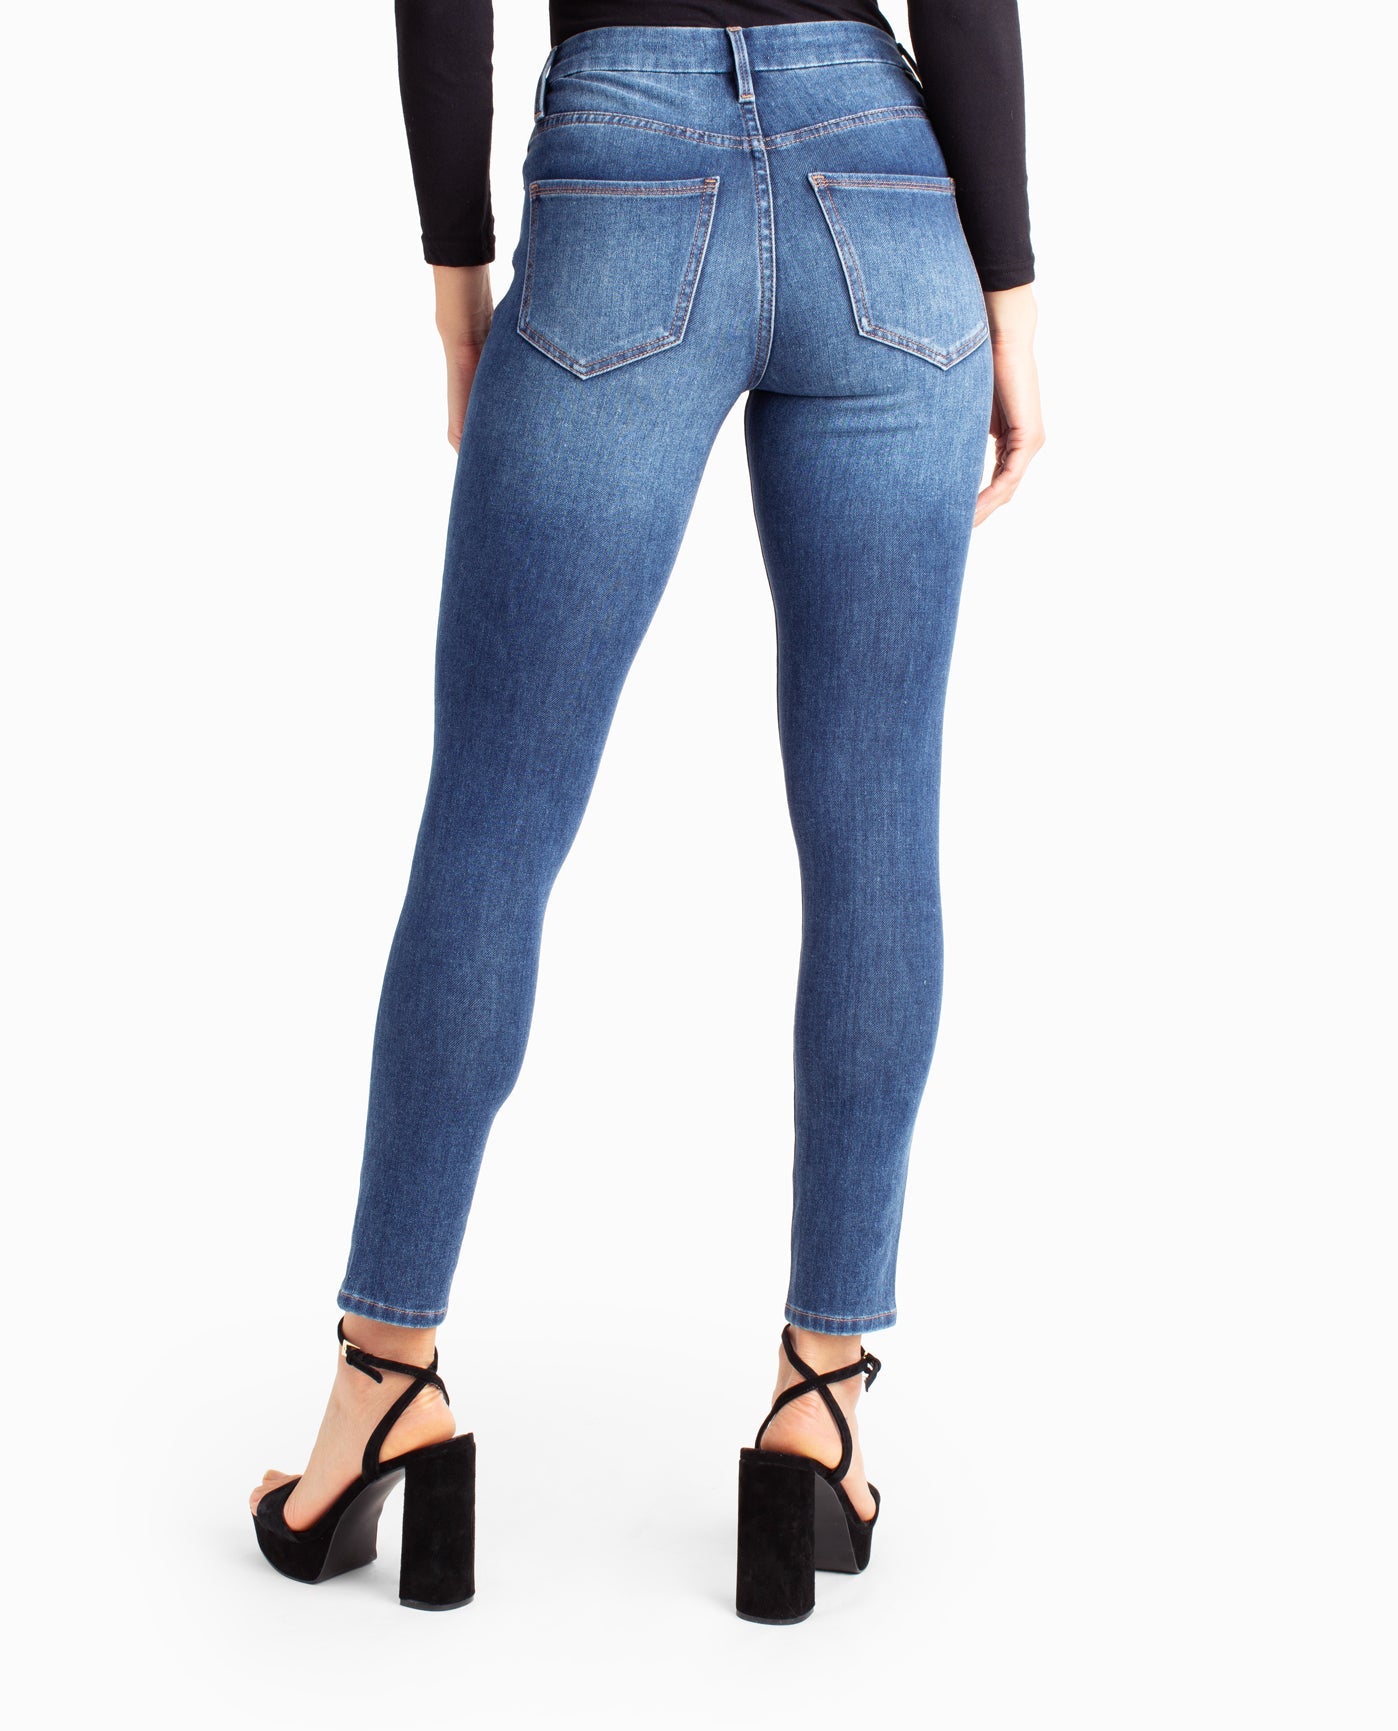 Women's True Shape Jeans, High-Rise Skinny-Leg | Jeans at L.L.Bean